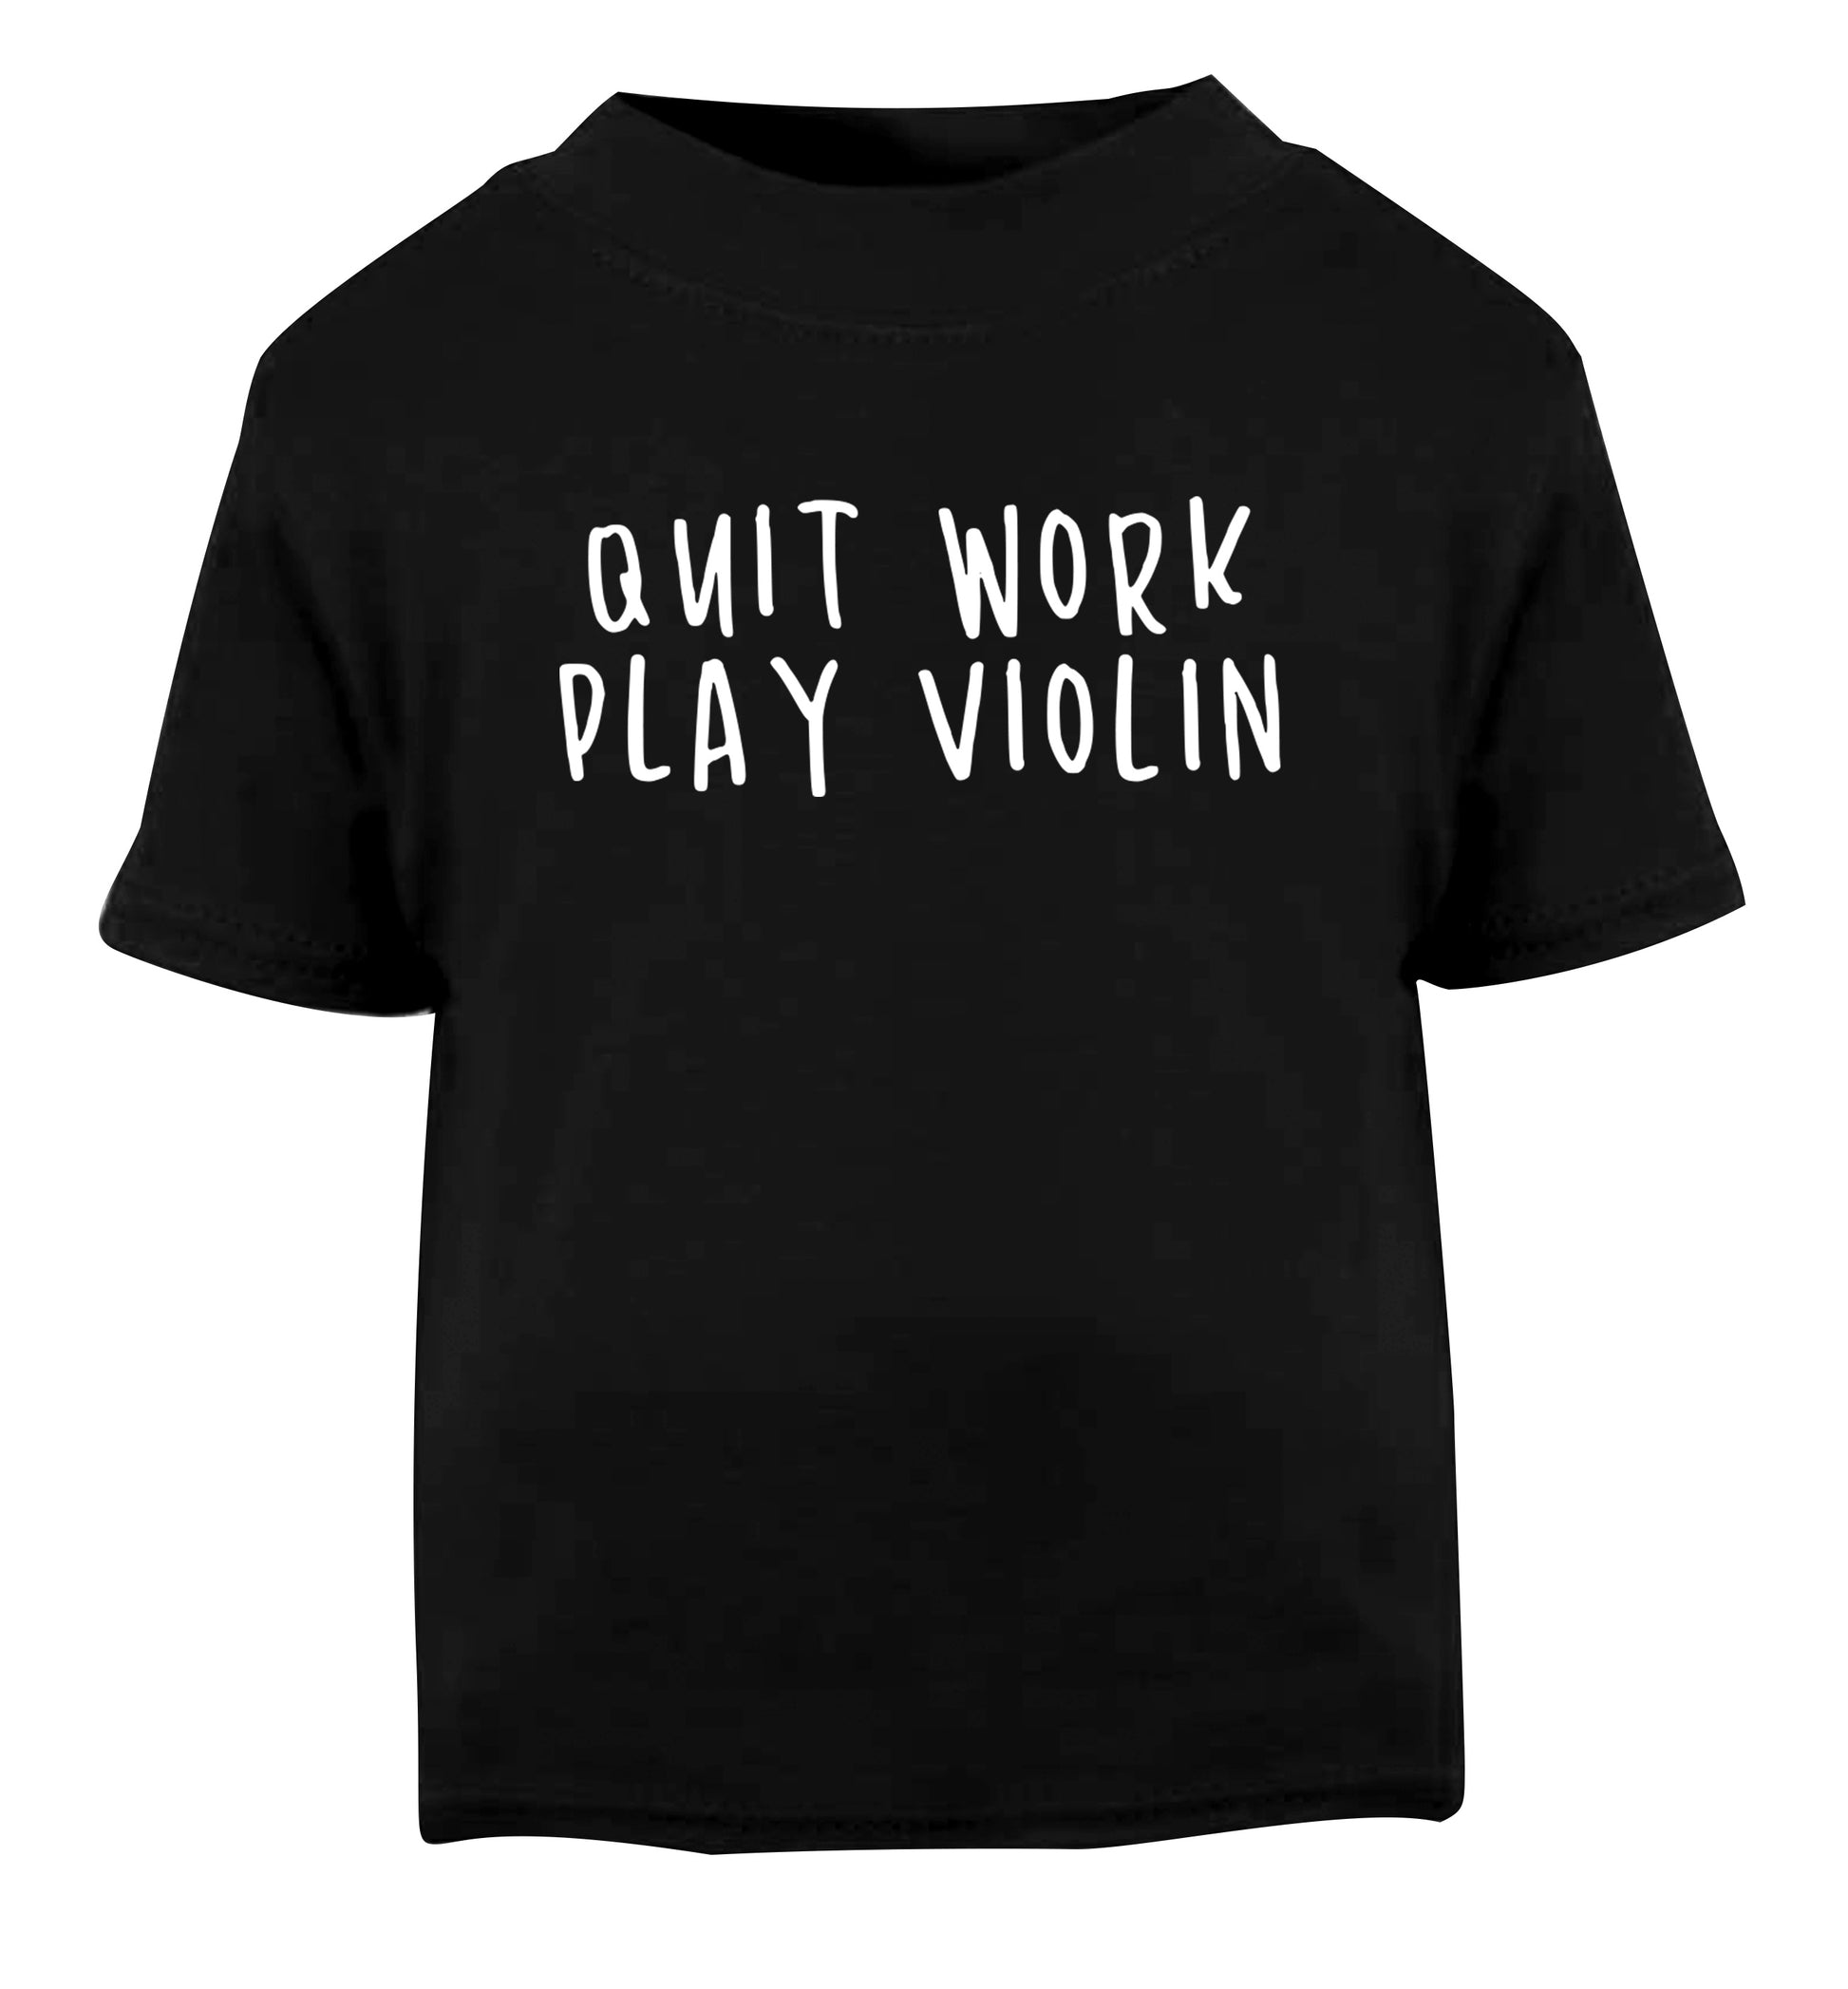 Quit work play violin Black Baby Toddler Tshirt 2 years